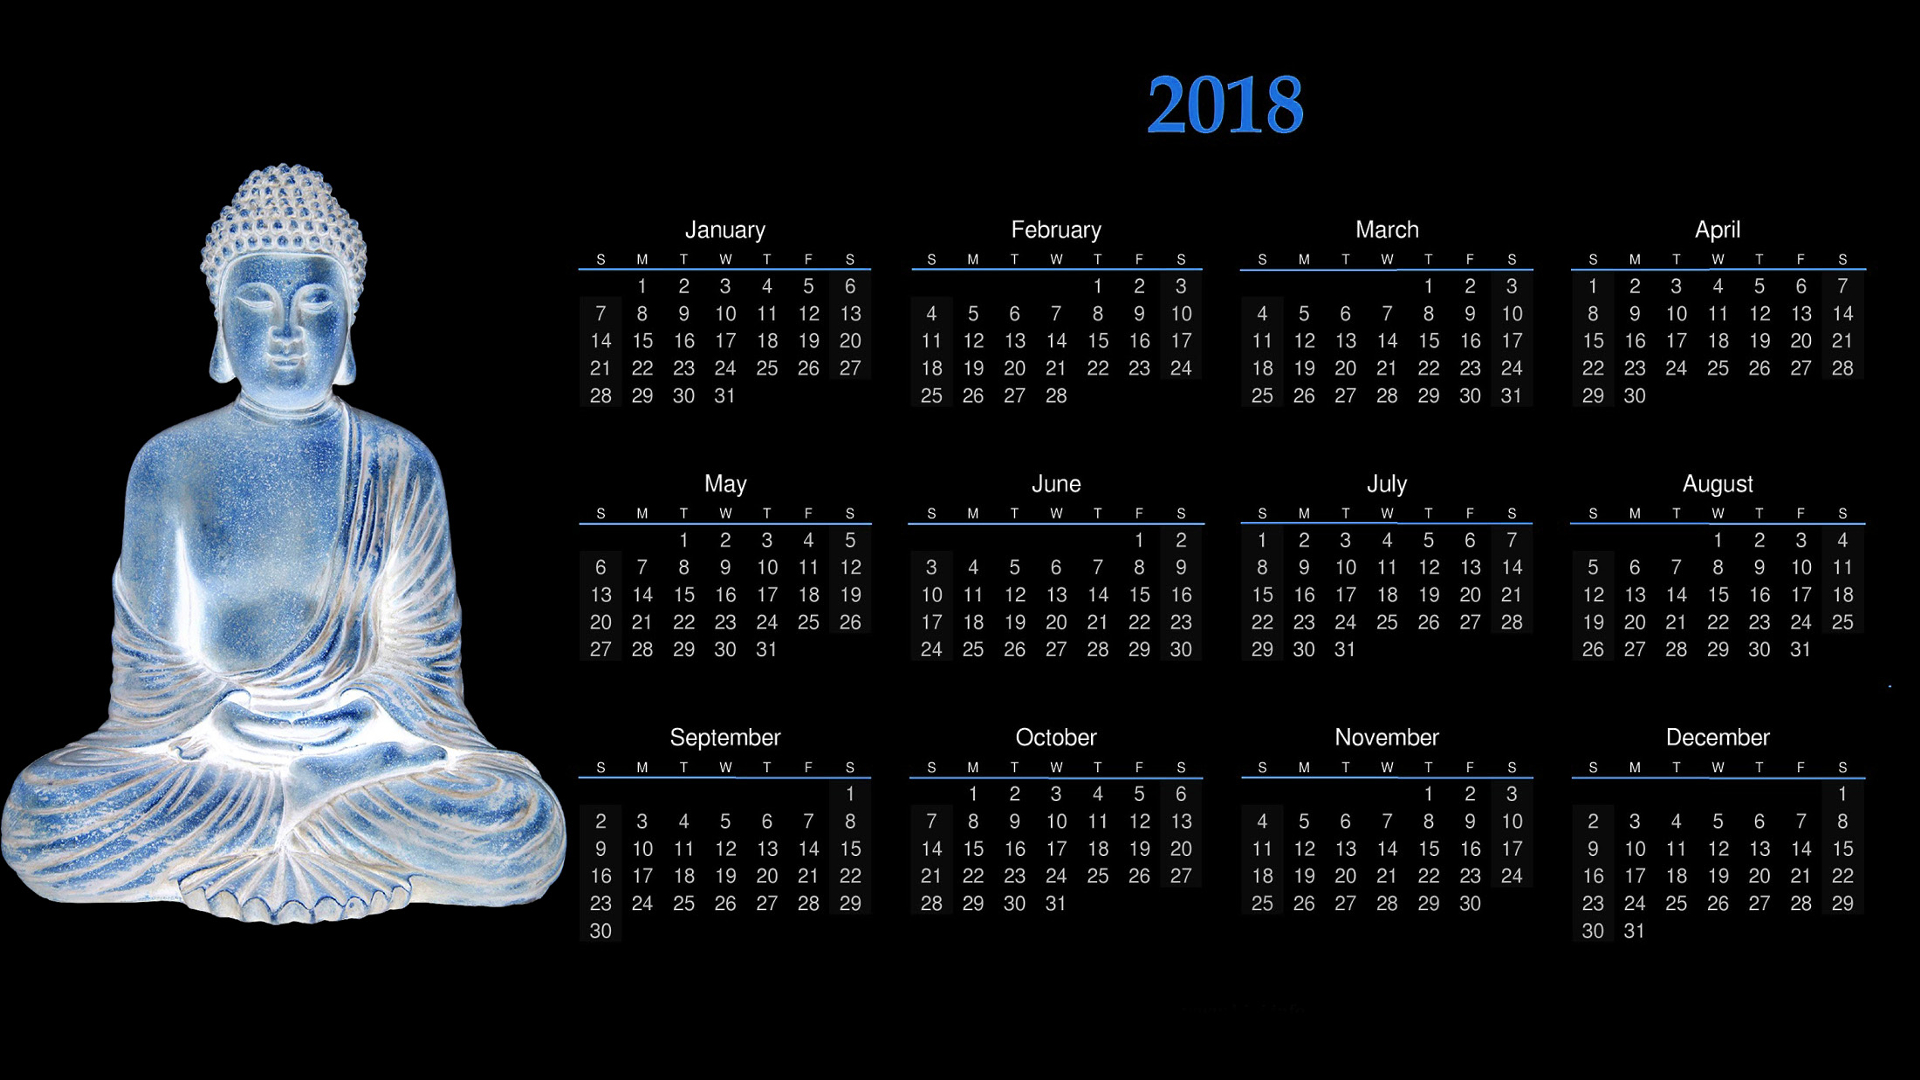 General 1920x1080 calendar 2018 (year) black background month Buddha meditation numbers sculpture